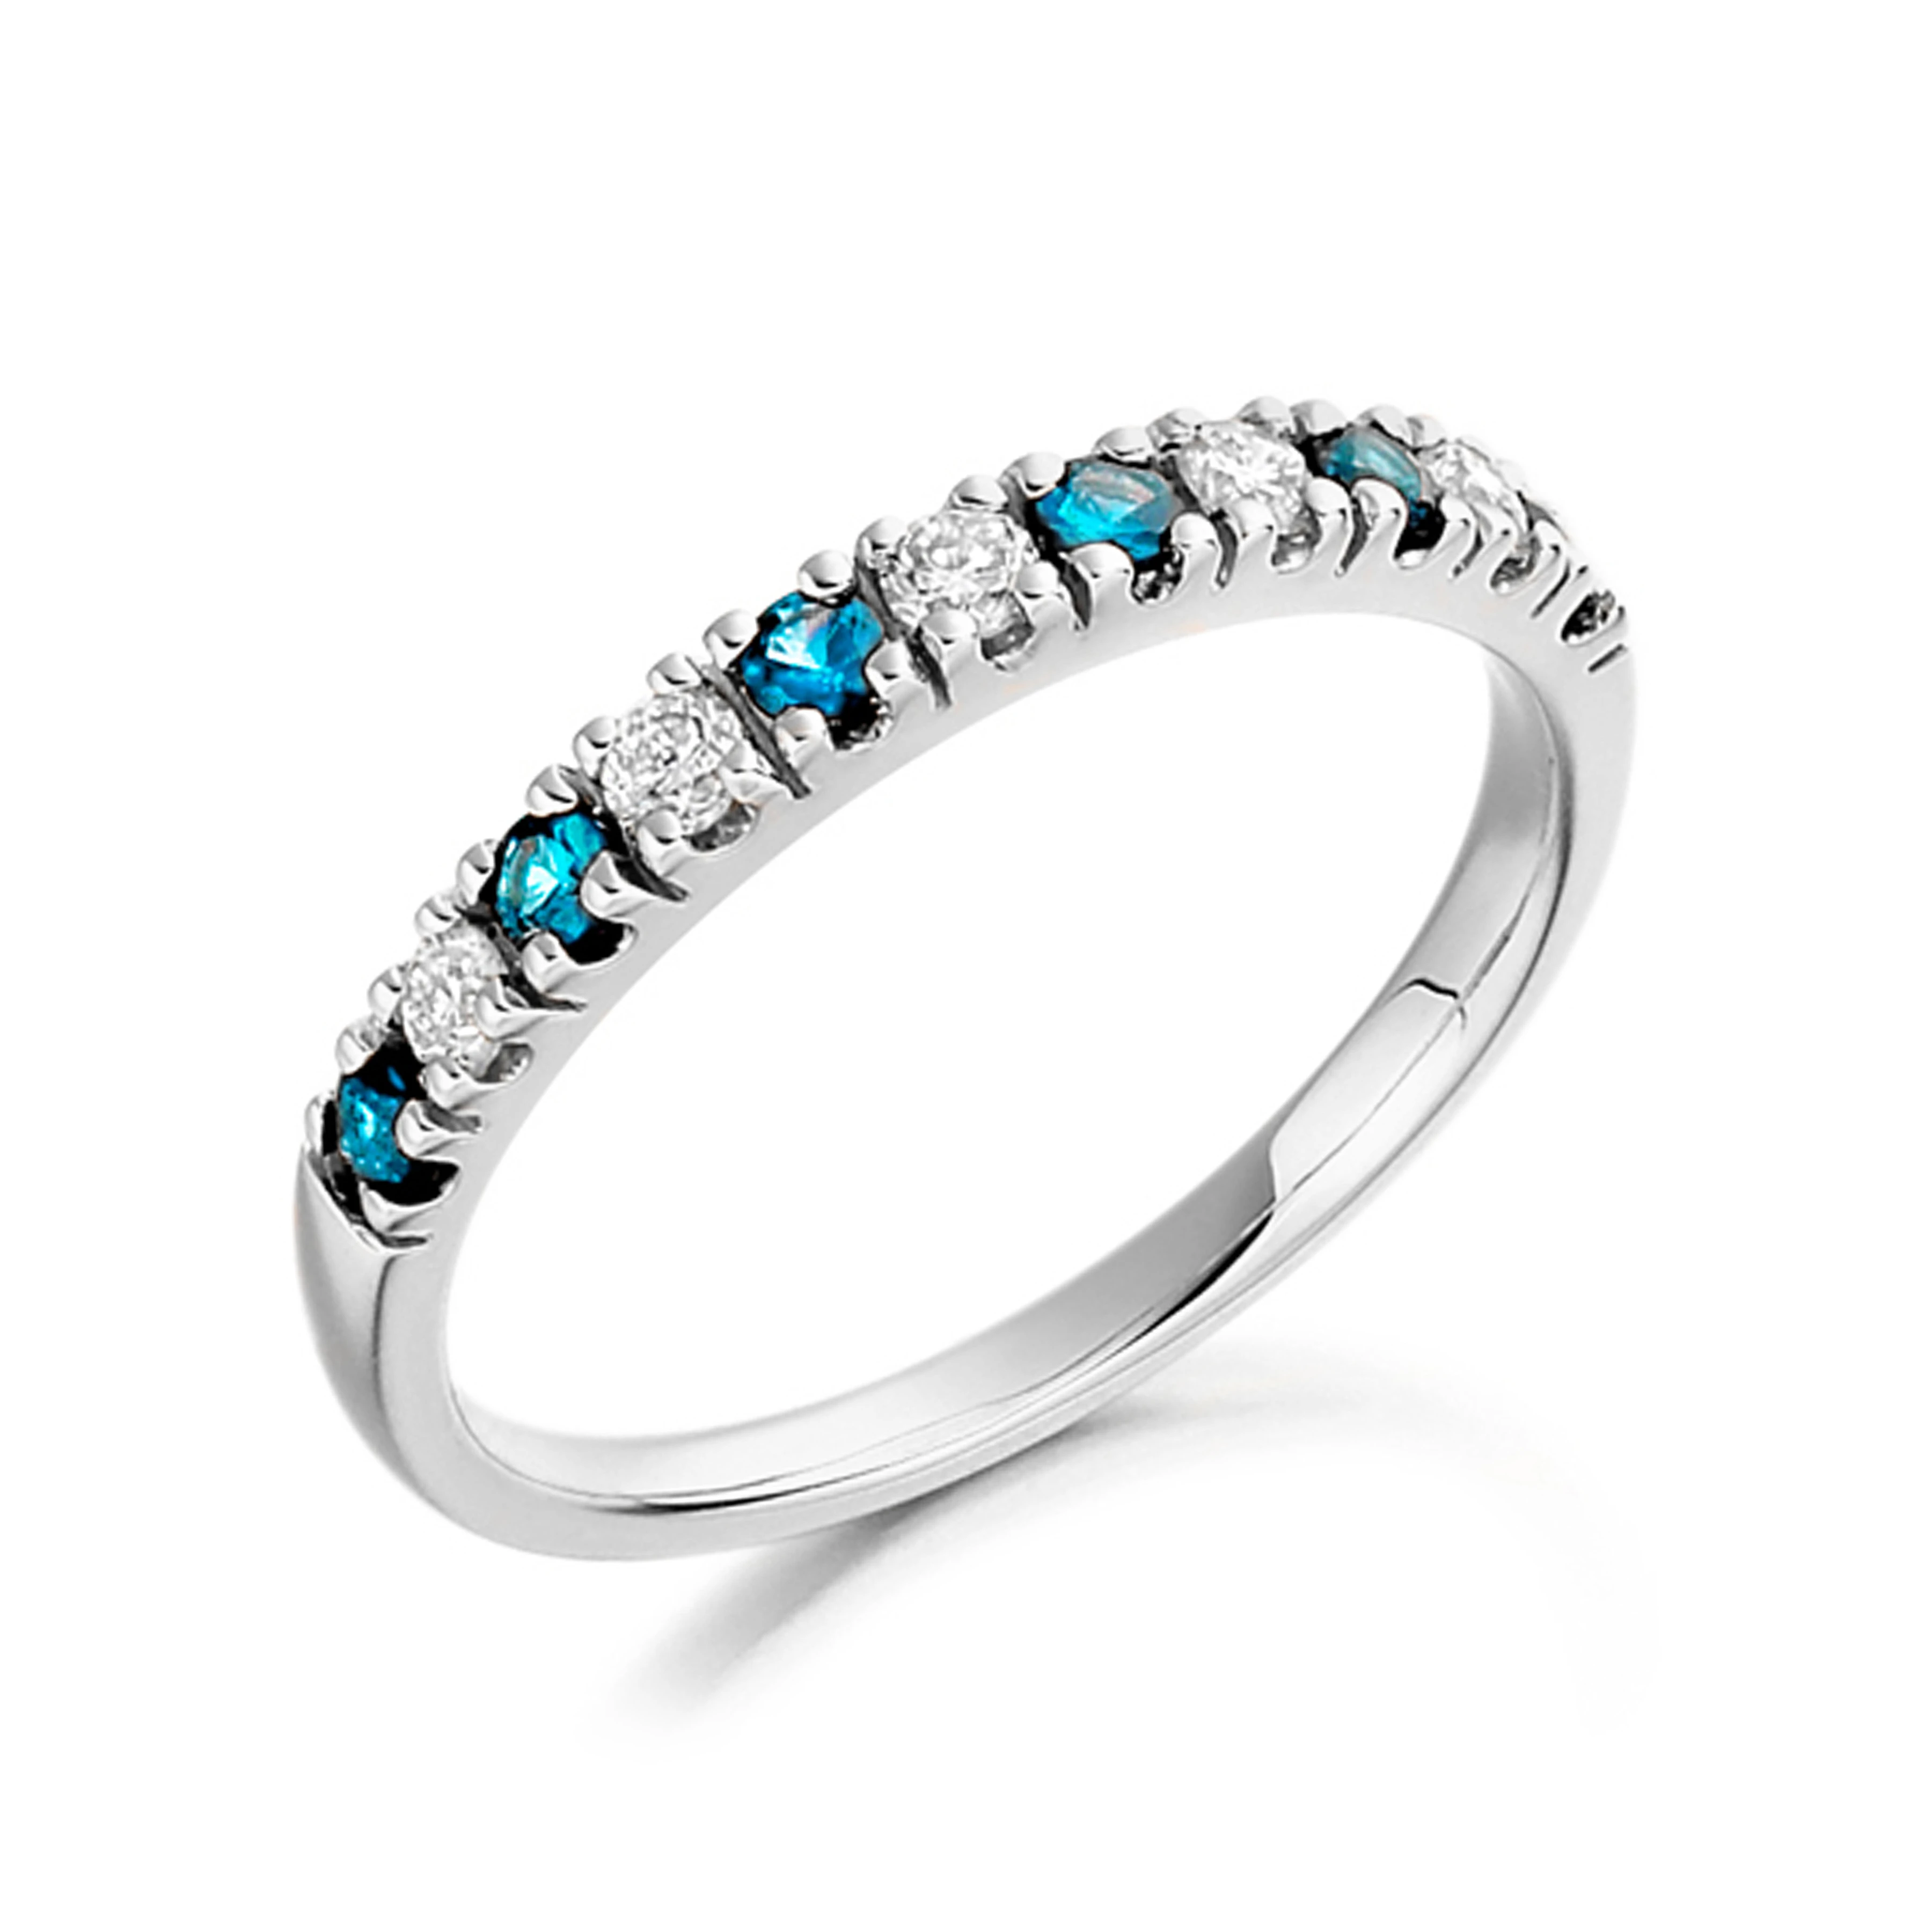 2mm Round Blue Topaz Half Eternity Diamond And Gemstone Ring